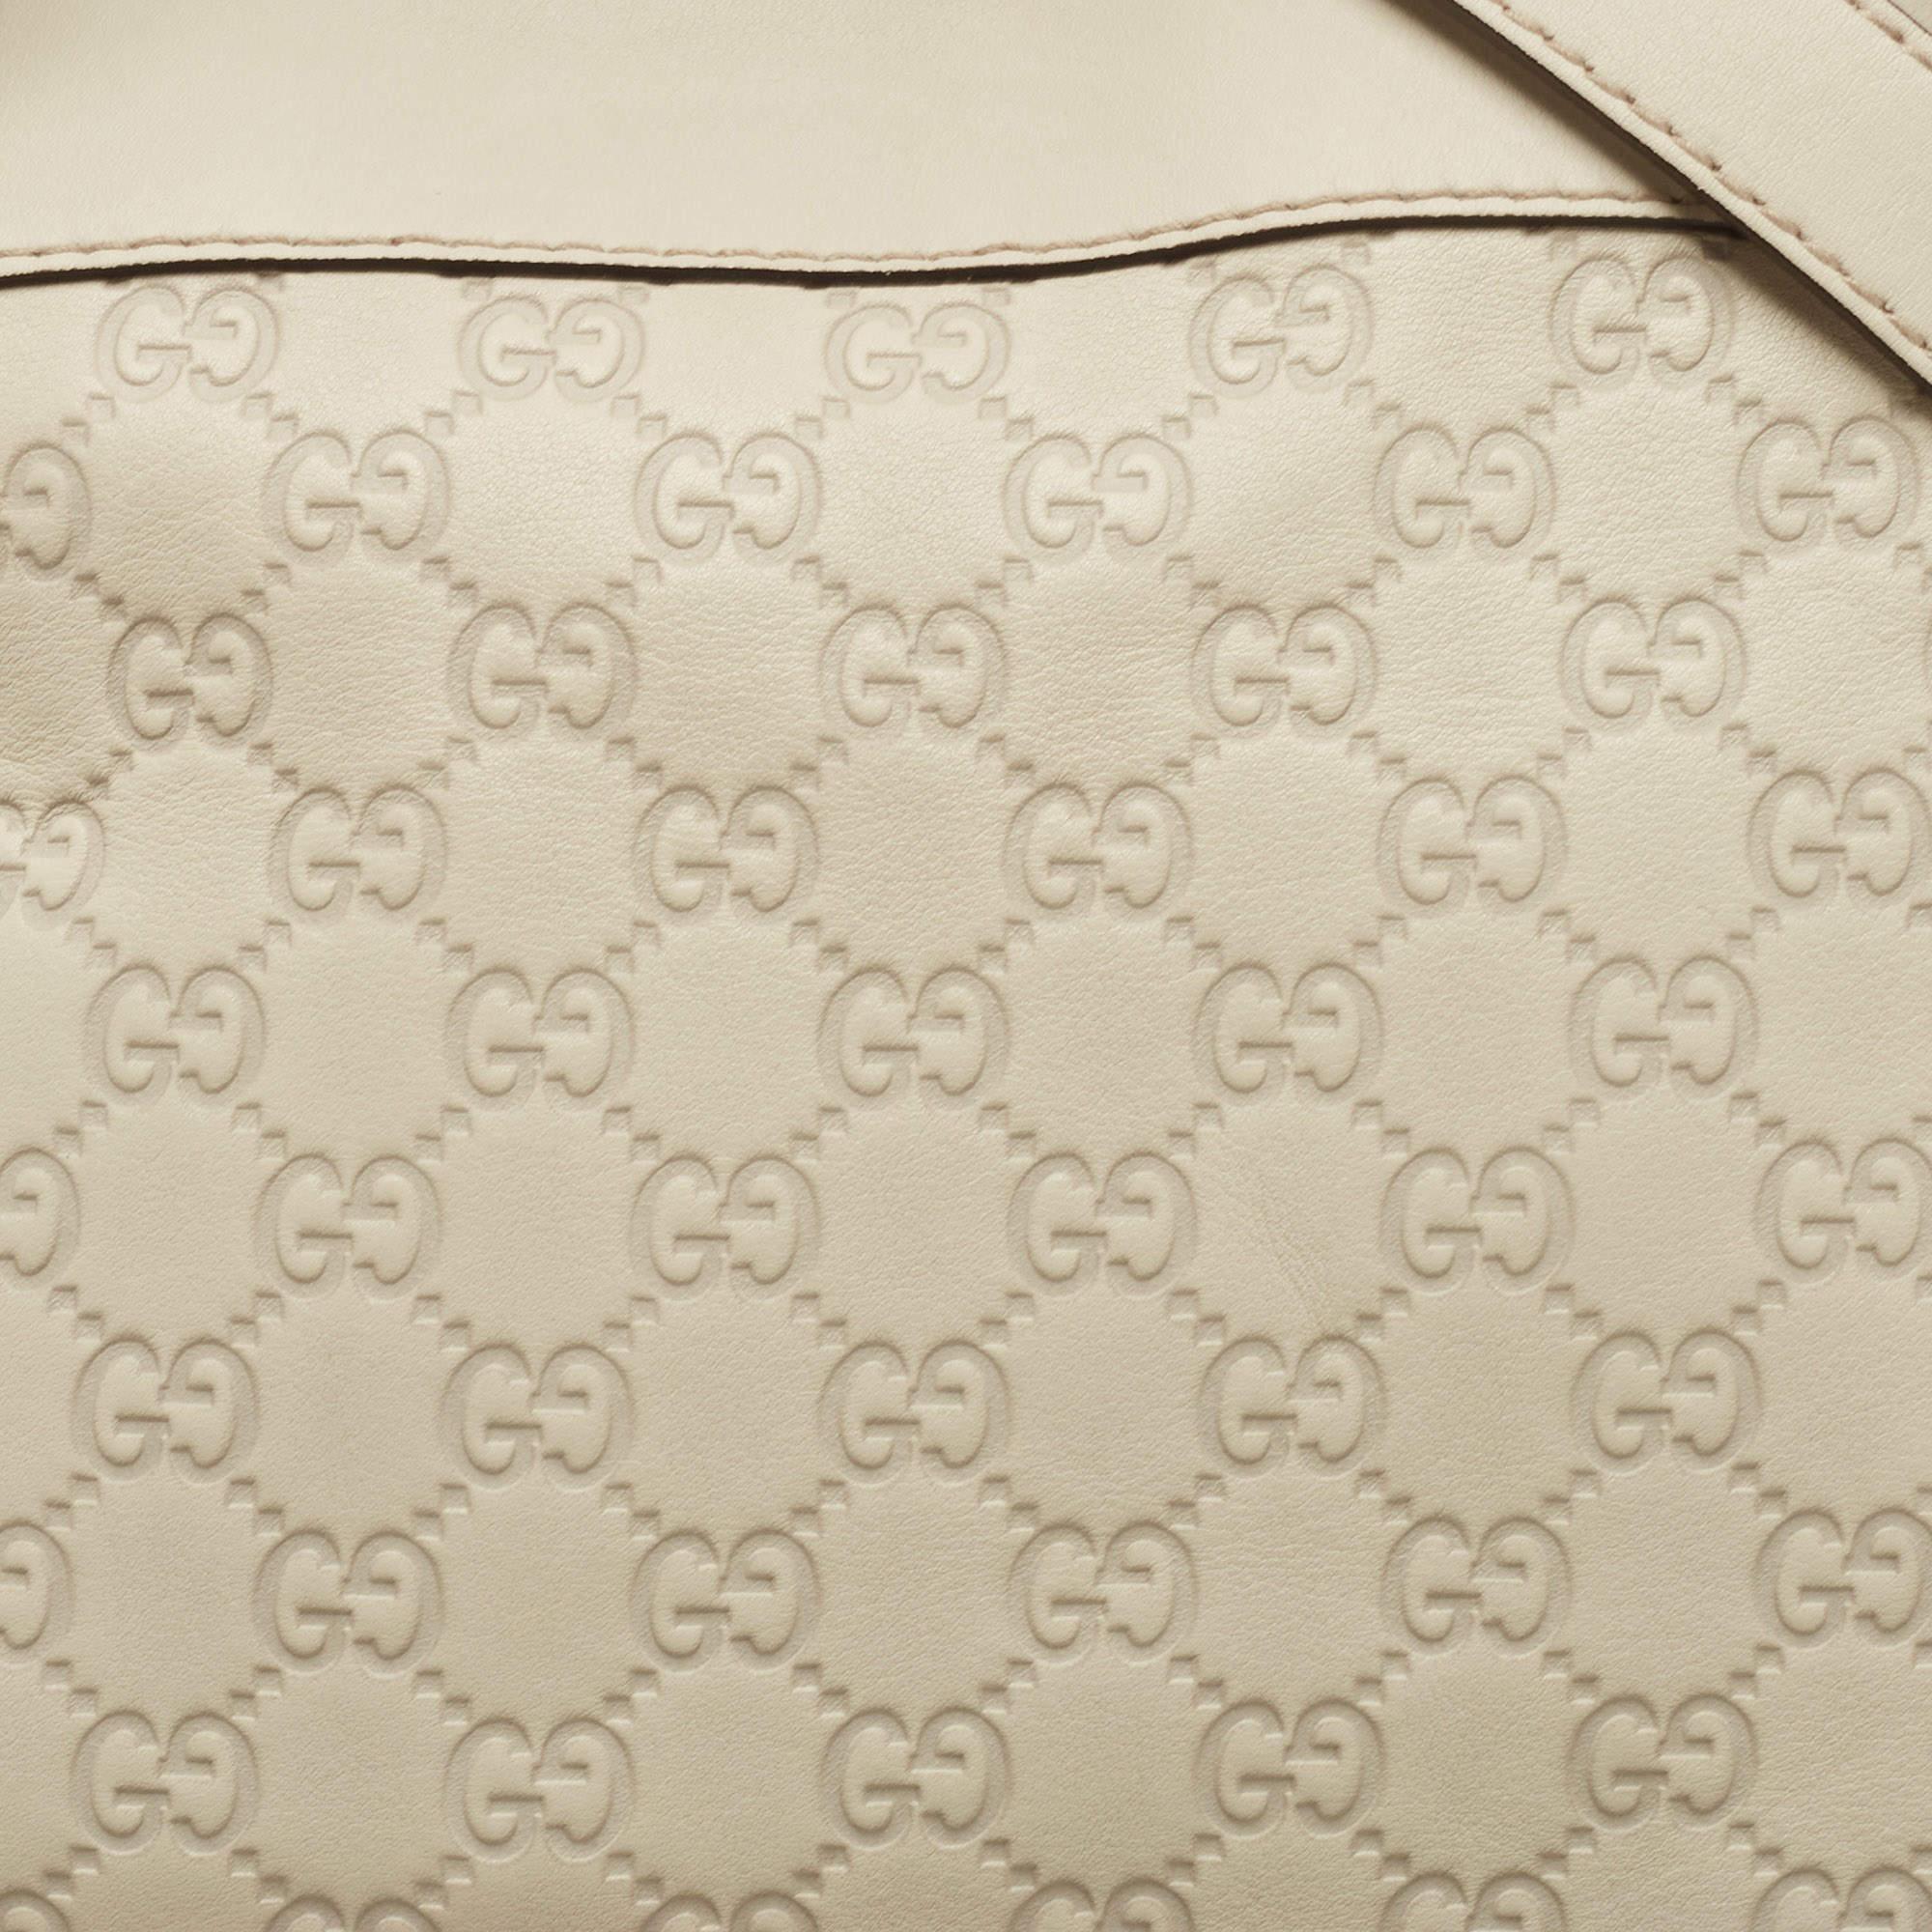 Gucci Off White Guccisima Leather Mayfair Tote 10